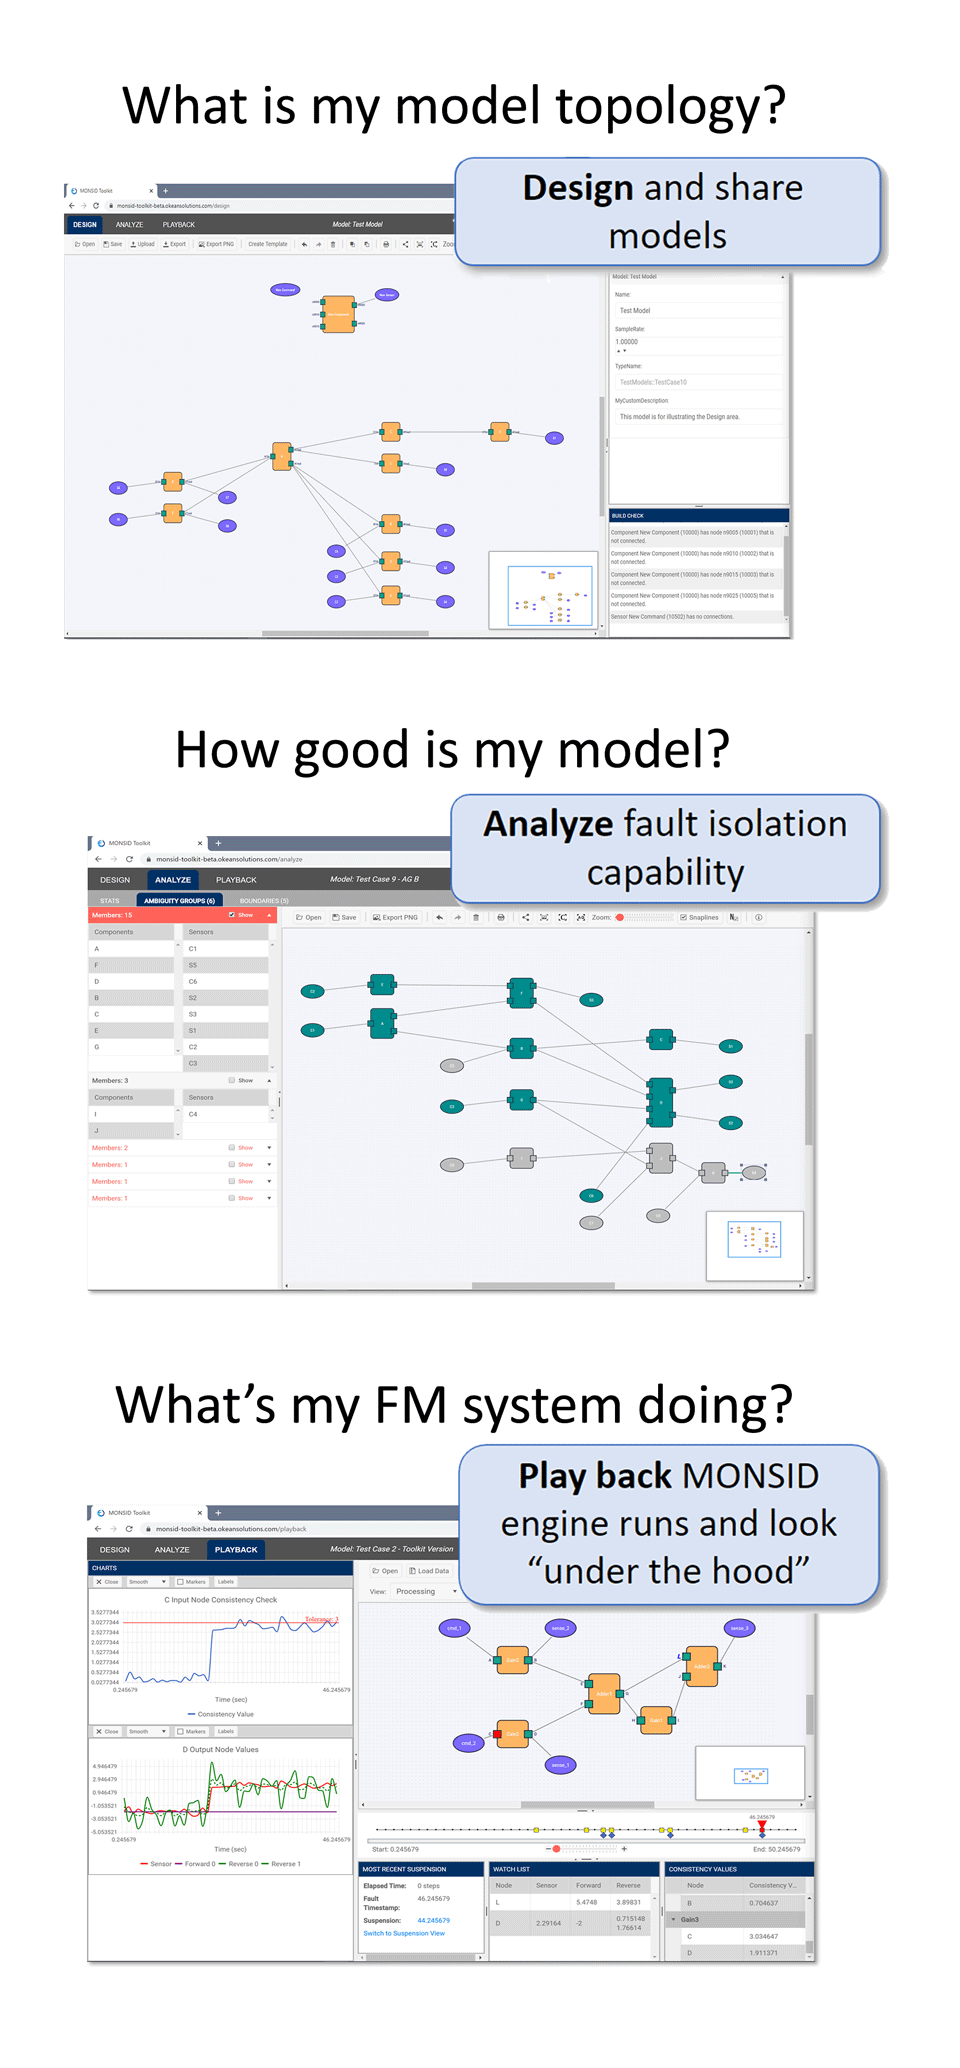 MONSID model design example. Credit Okean Solutions.